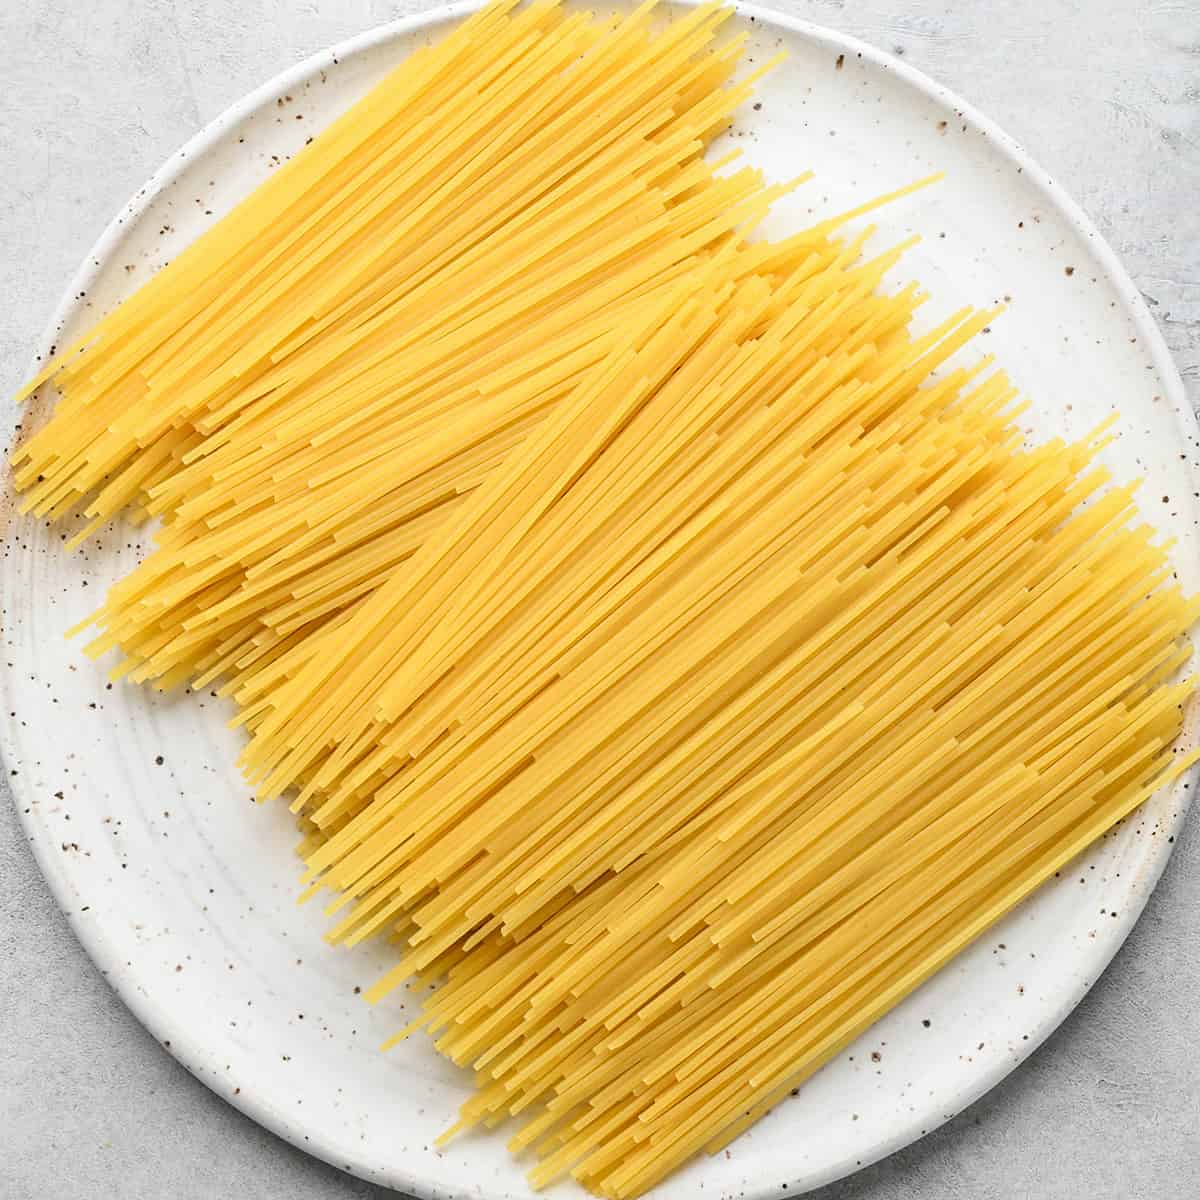 uncooked pasta noodles cut in half to make Chicken Tetrazzini